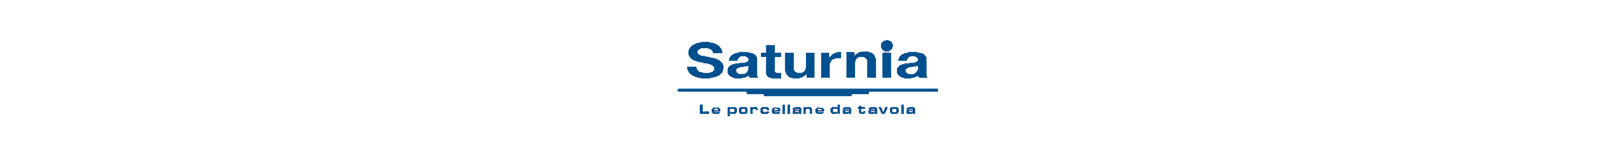 Logo-Saturnia-1600x150-trasp.png